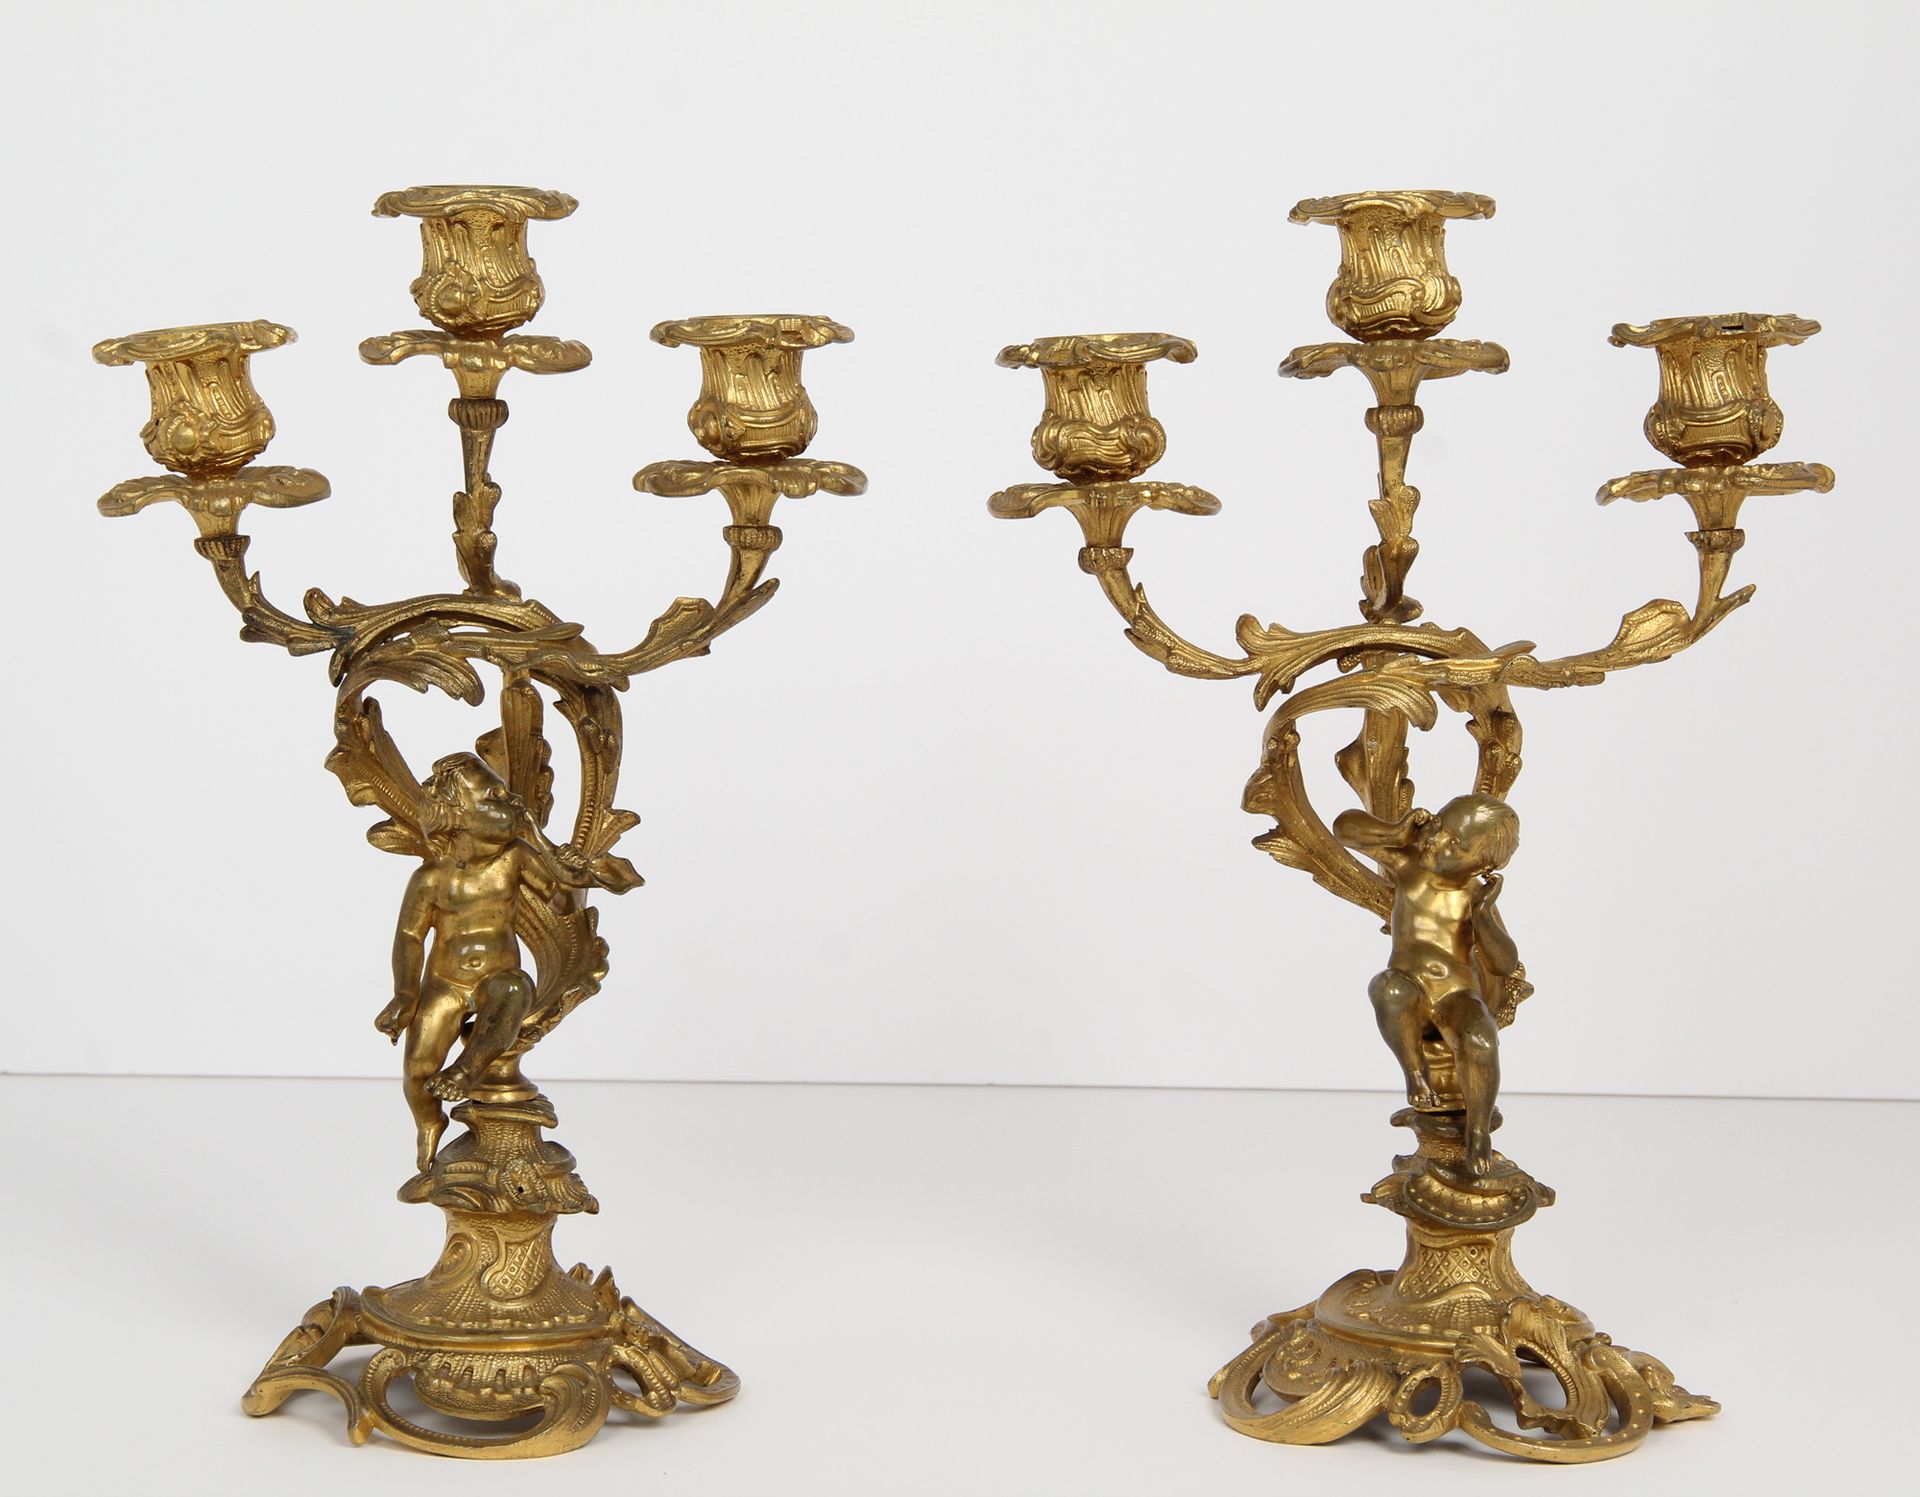 Null 烛台一对

镀金青铜三臂烛台，饰以卷轴式叶片，描绘了一个正在对着海螺壳吹气的孩子和另一个捂着耳朵的孩子。

路易十五风格。

时期：19 世纪。

H&hellip;